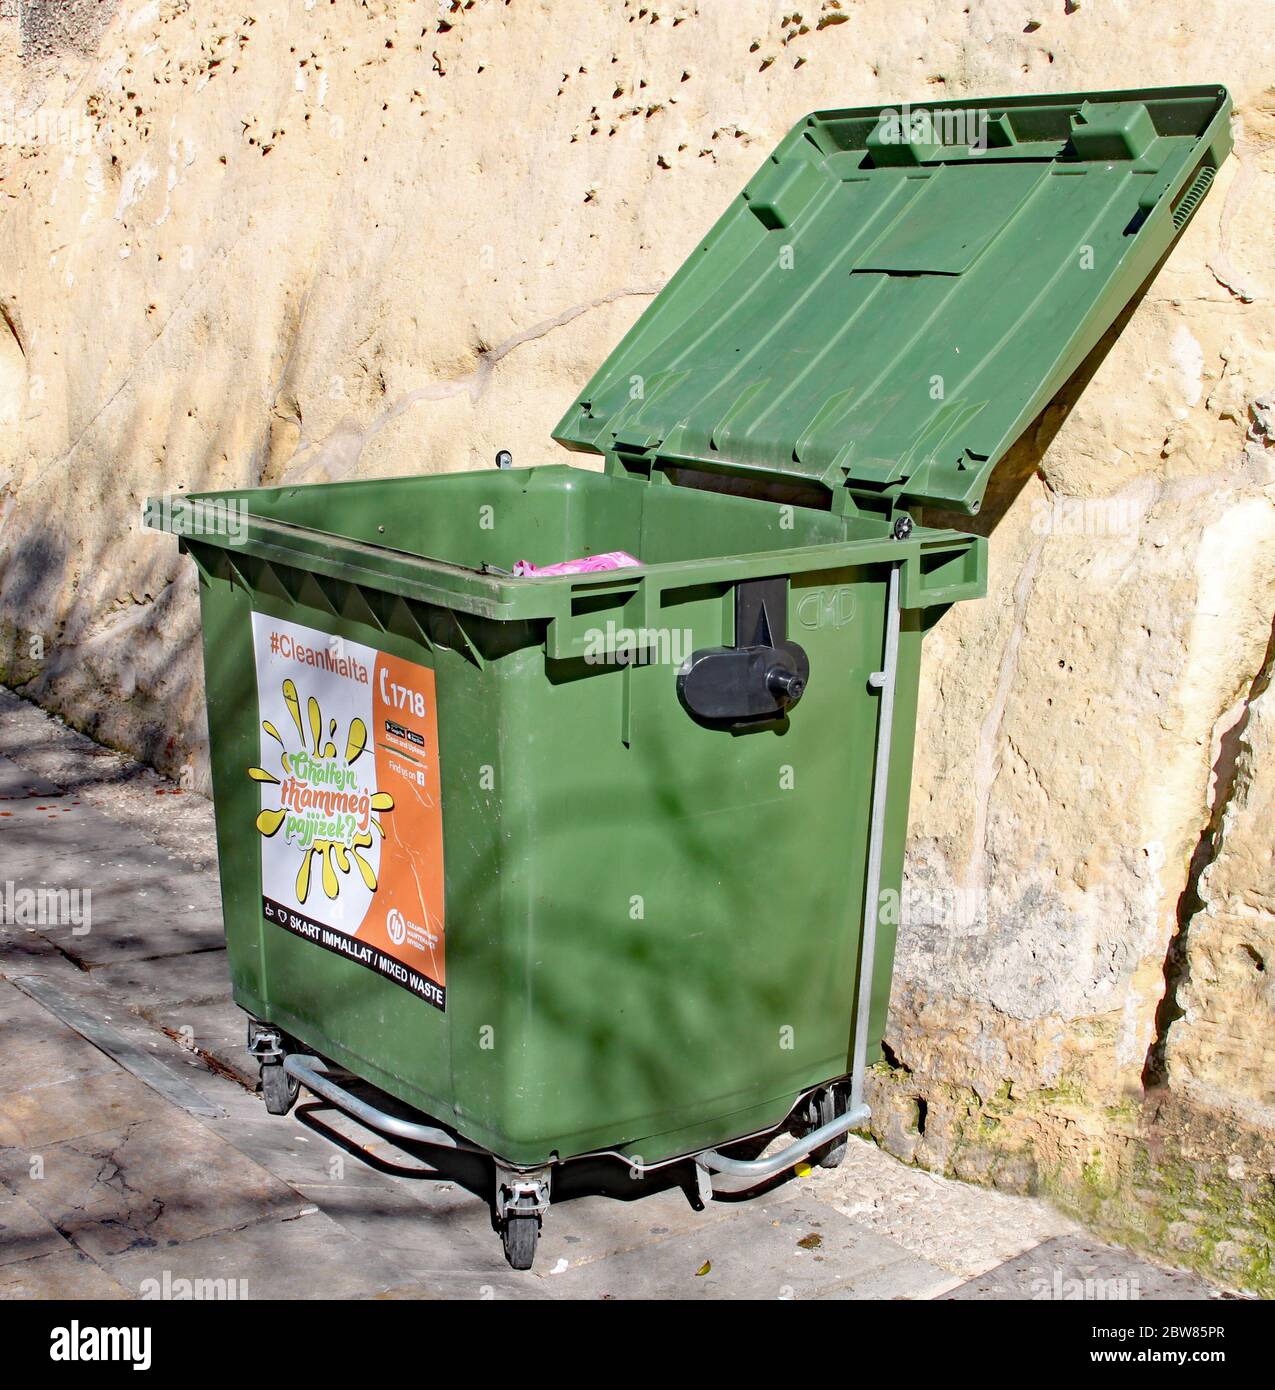 VALLETTA, MALTA - NOVEMBER 10TH 2019: A green rubbish bin stands open near the Valletta bus station. Ghalfejn thammeg pajjizek means Why tarnish your Stock Photo